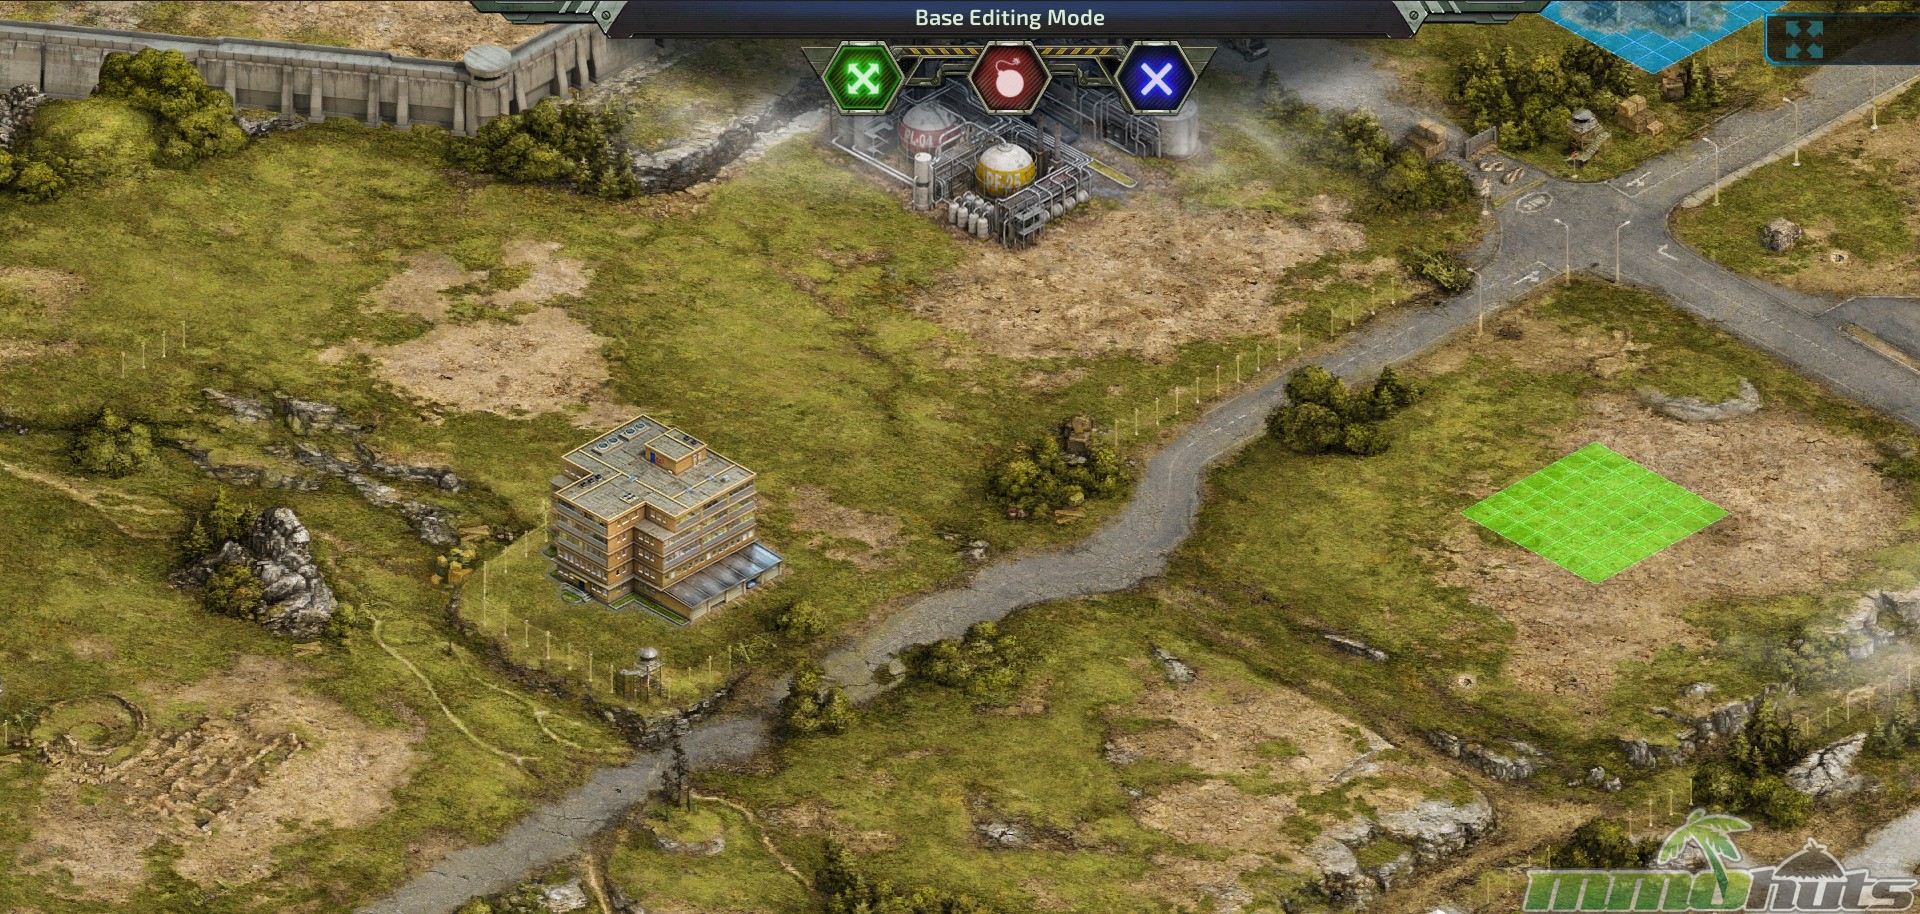 Generals: Art of War 🔥 Play online